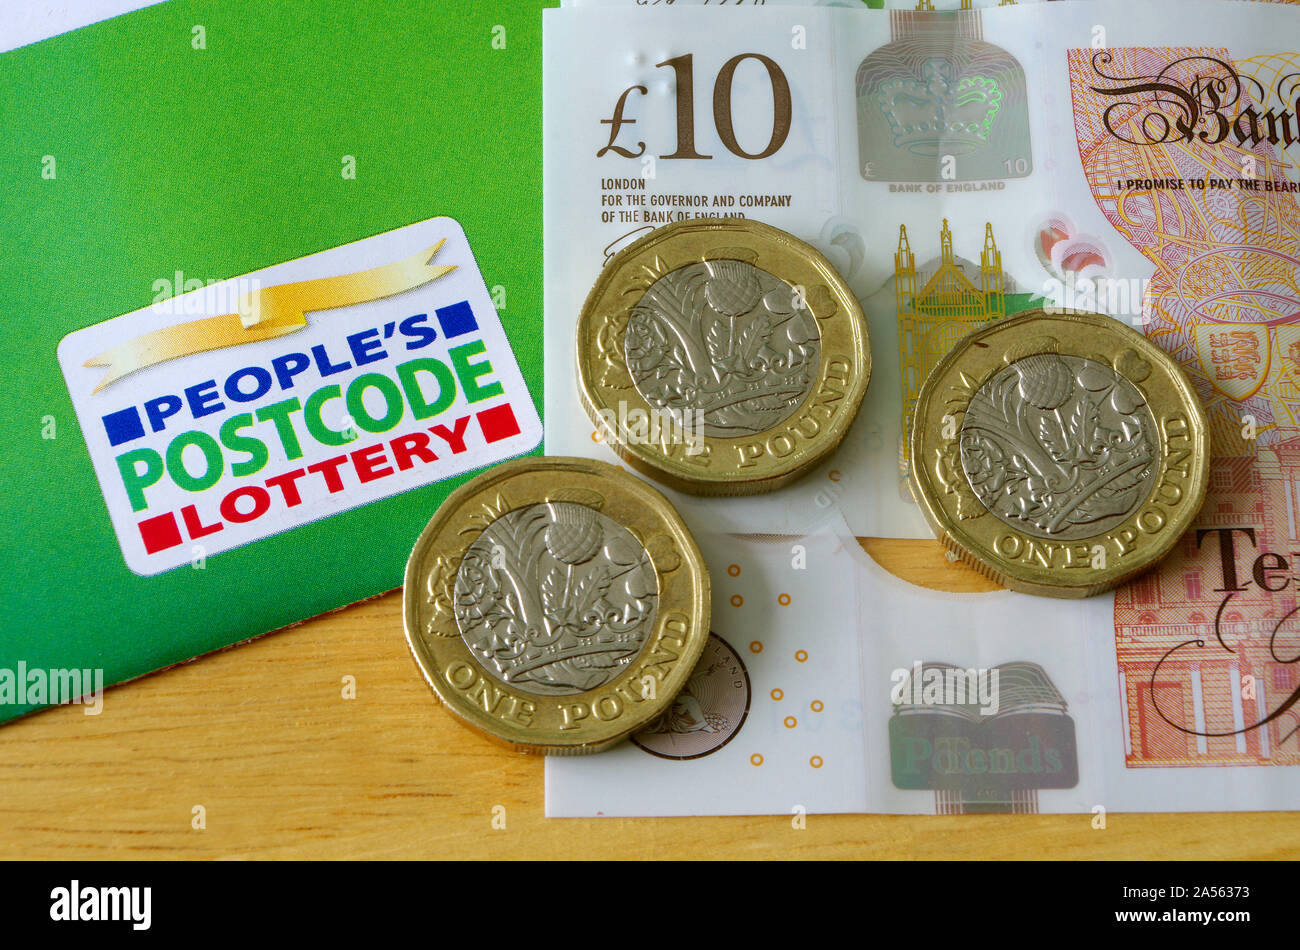 People's Postcode Lottery With Money, UK Stock Photo